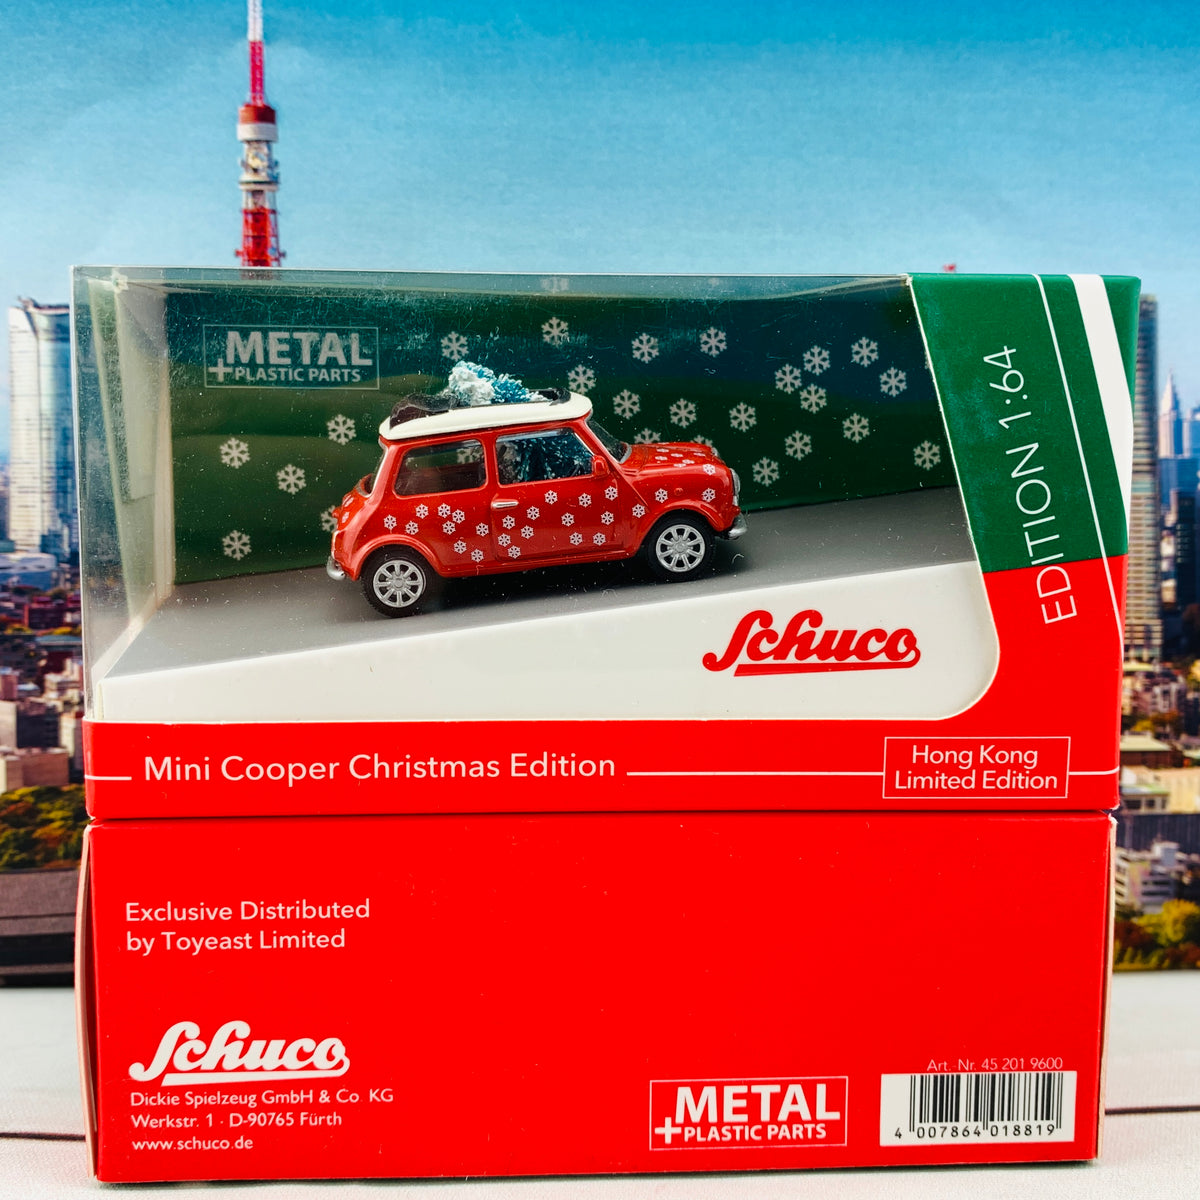 Schuco 1/64 Mini Cooper Christmas Edition (Hong Kong Limited